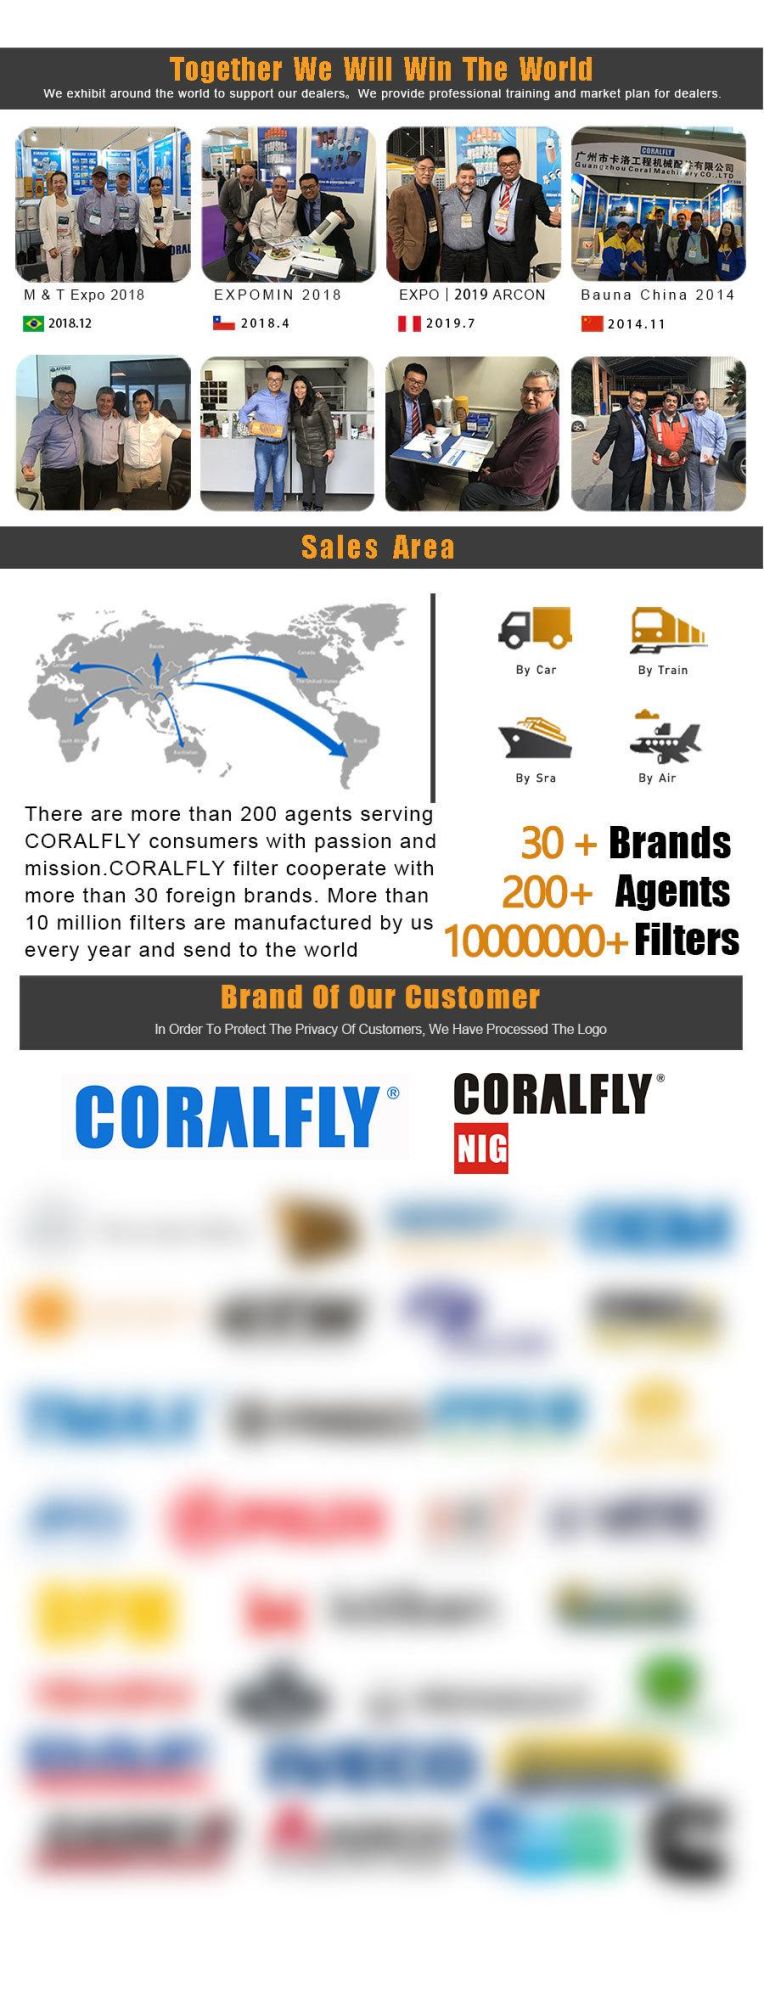 Coralfly Air Filter 31230-80500 Me063155 Me9715512 Af820m P11-9373 C17149 C17126 C29939 for Mitsubishi/Donaldson/Fleetguard/Mann